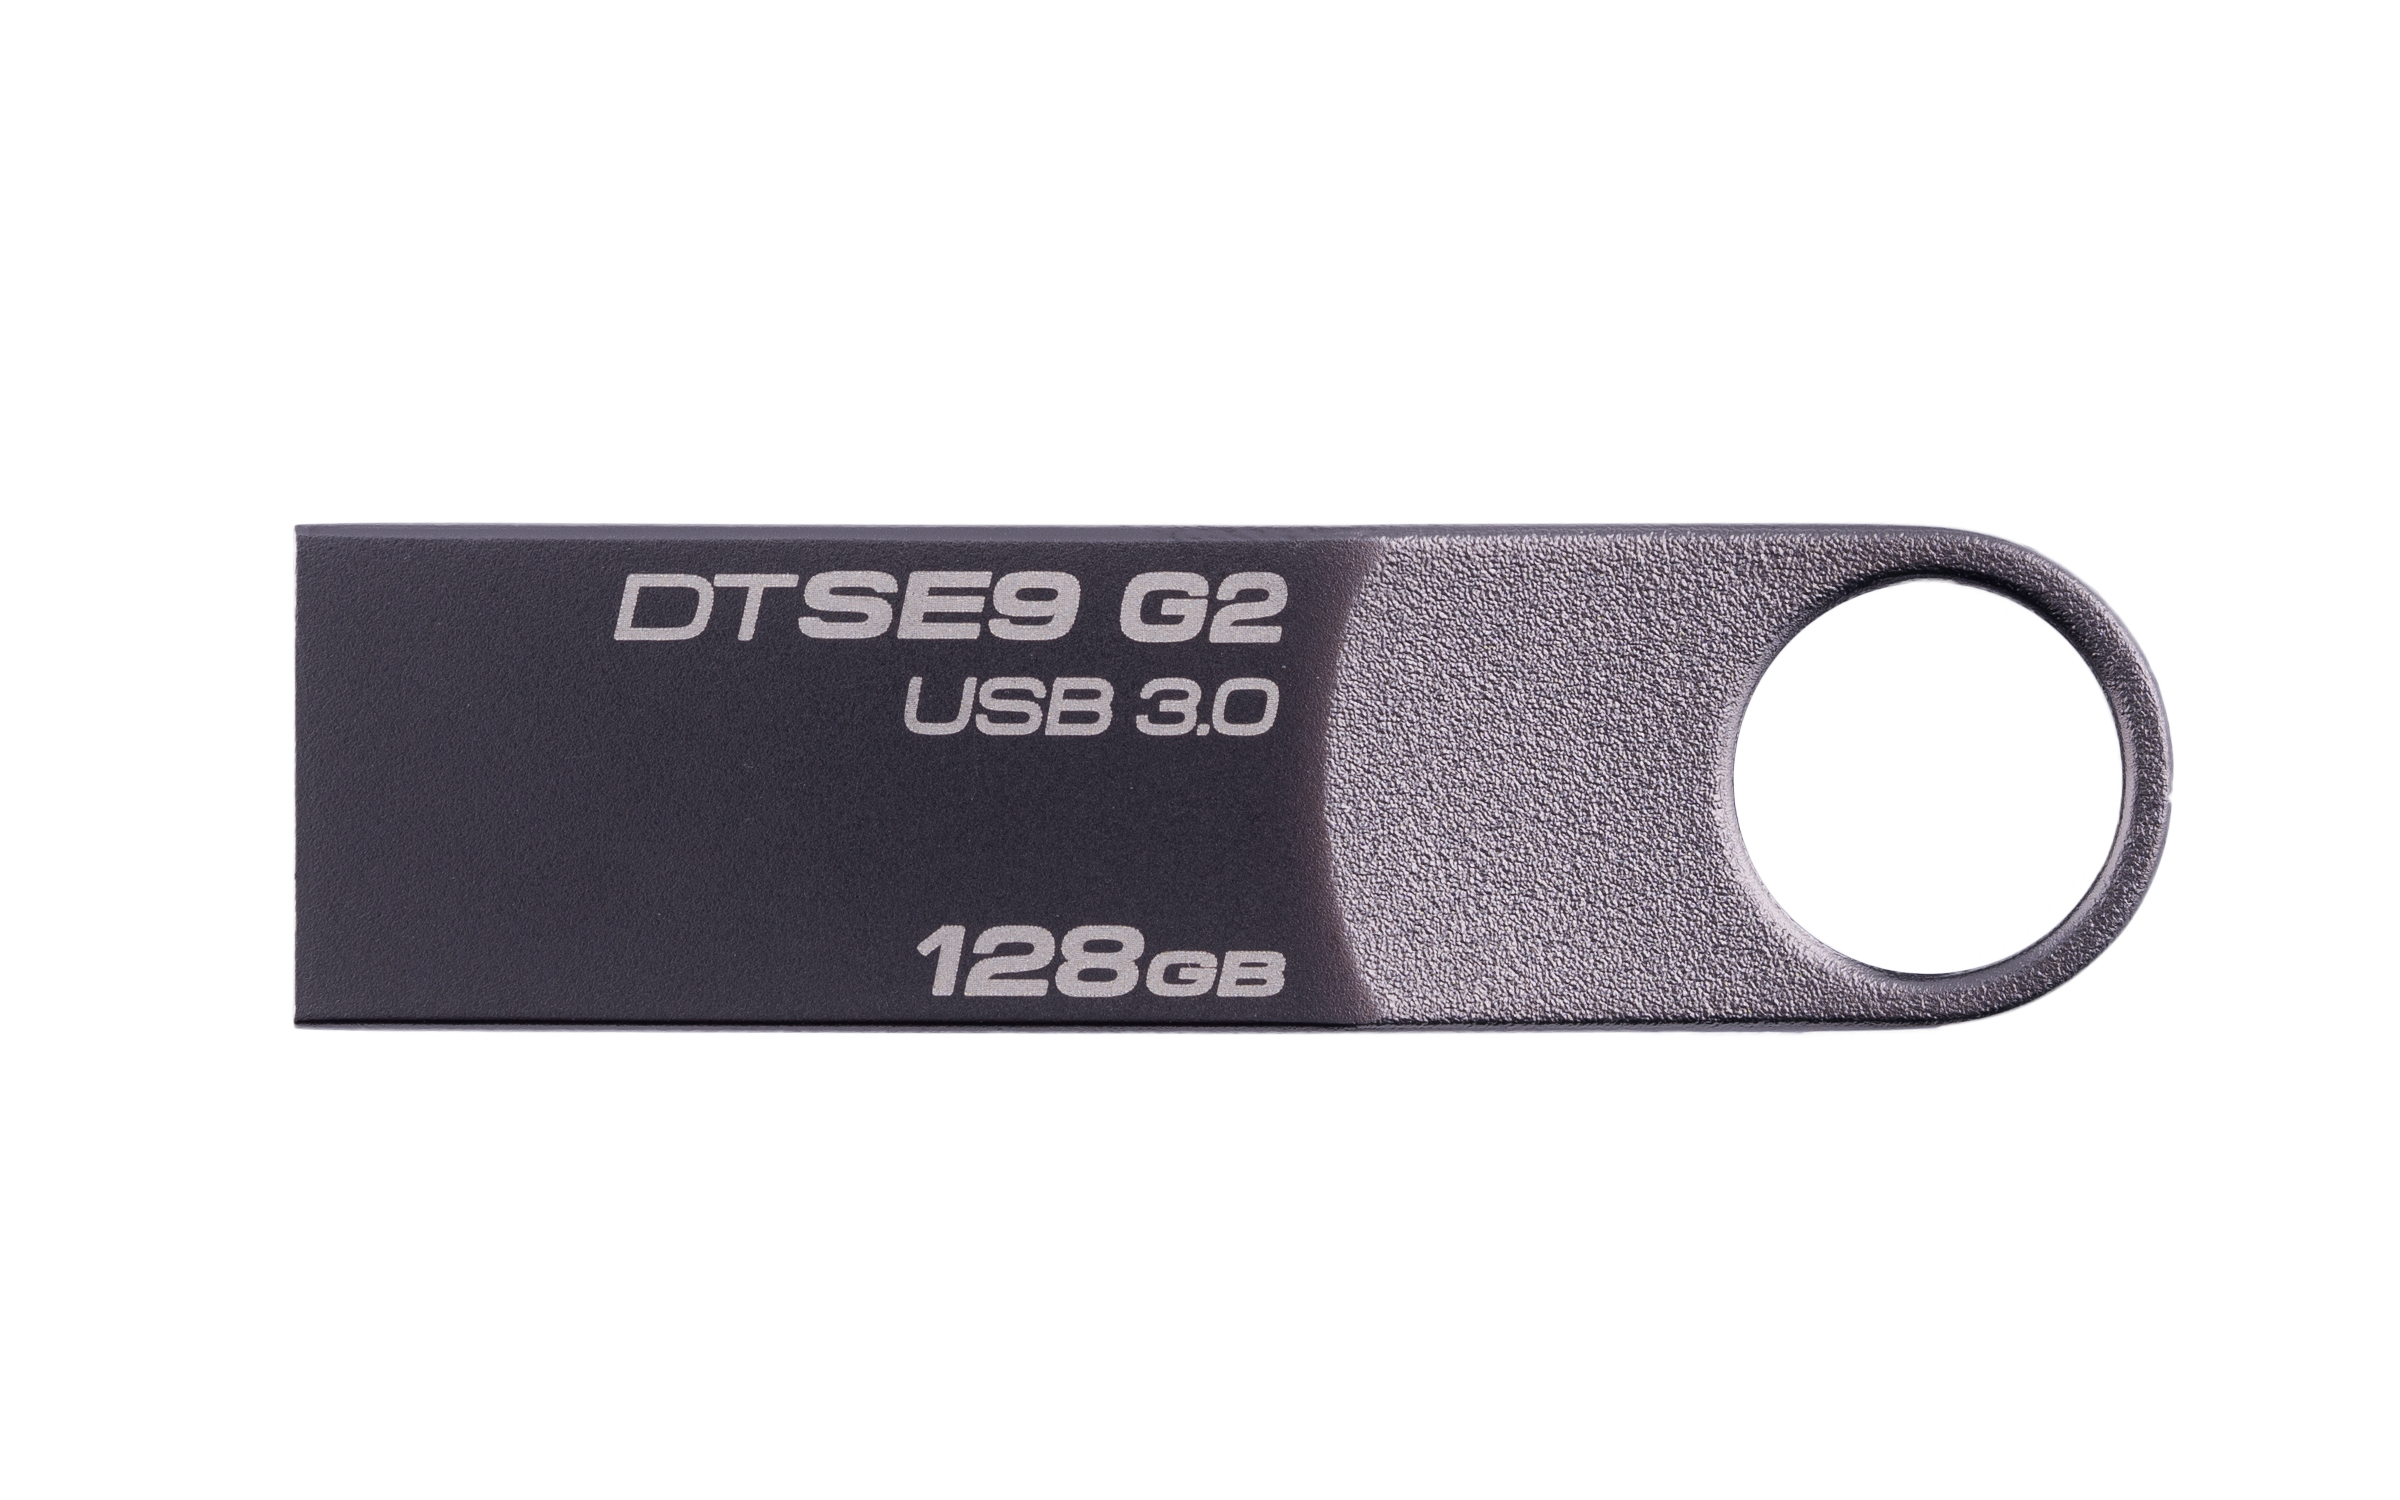 128GB Kingston USB 3.0 DT SE9G2 200/50 MB/s